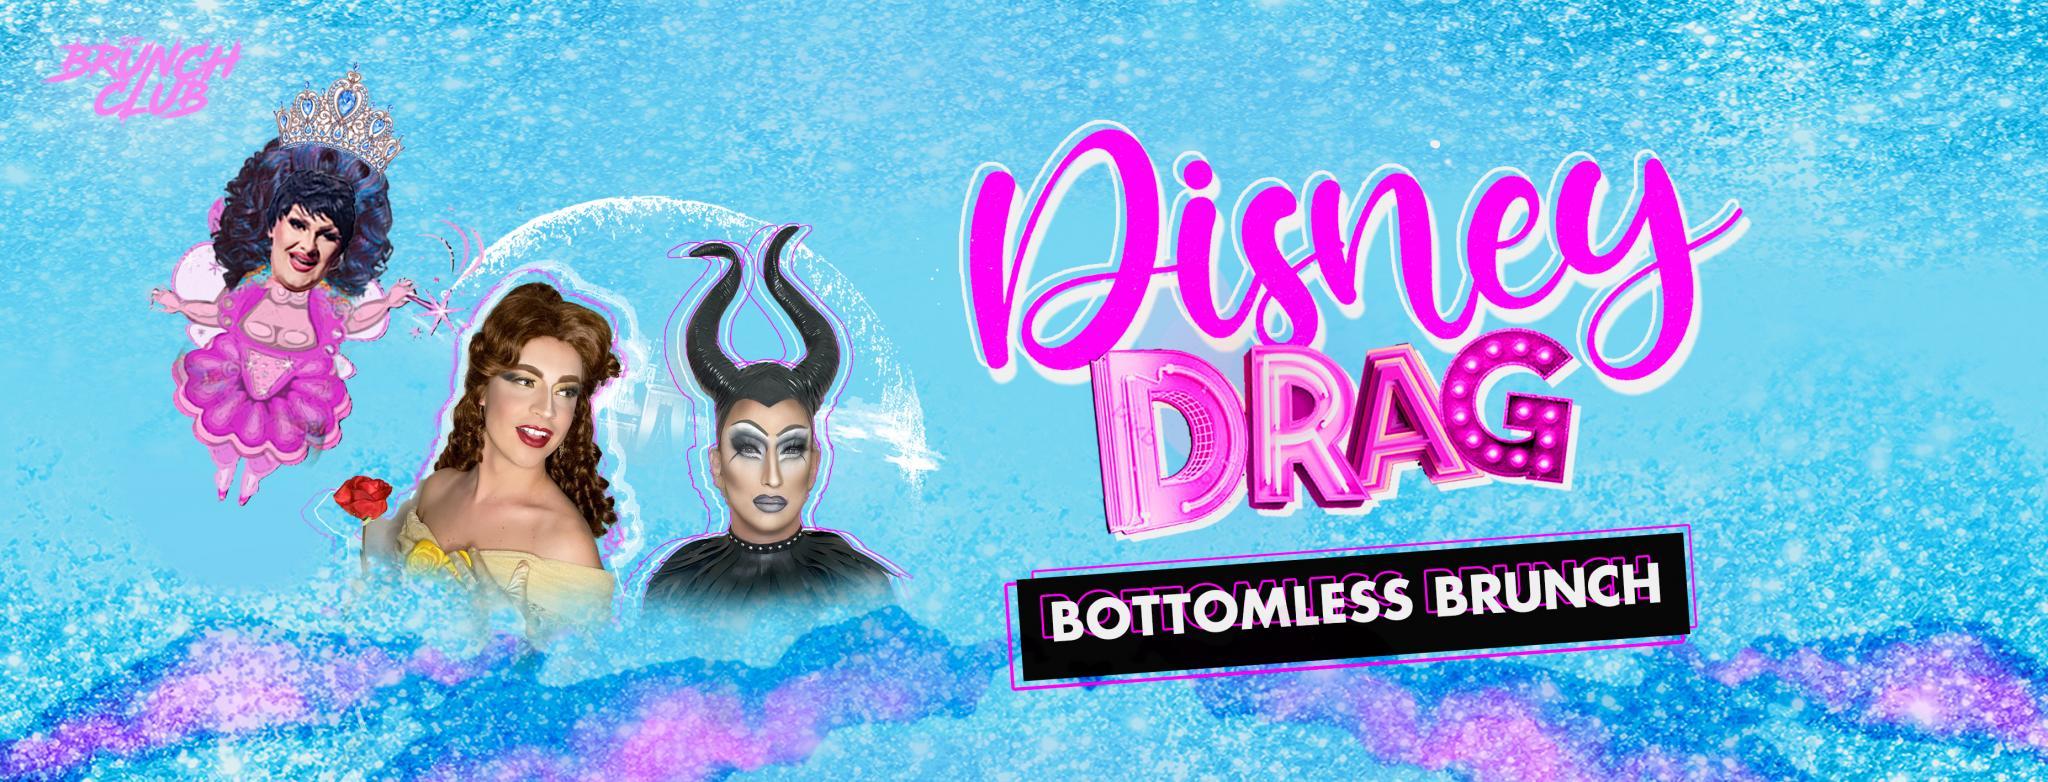 Disney Drag Bottomless Brunch - Belfast